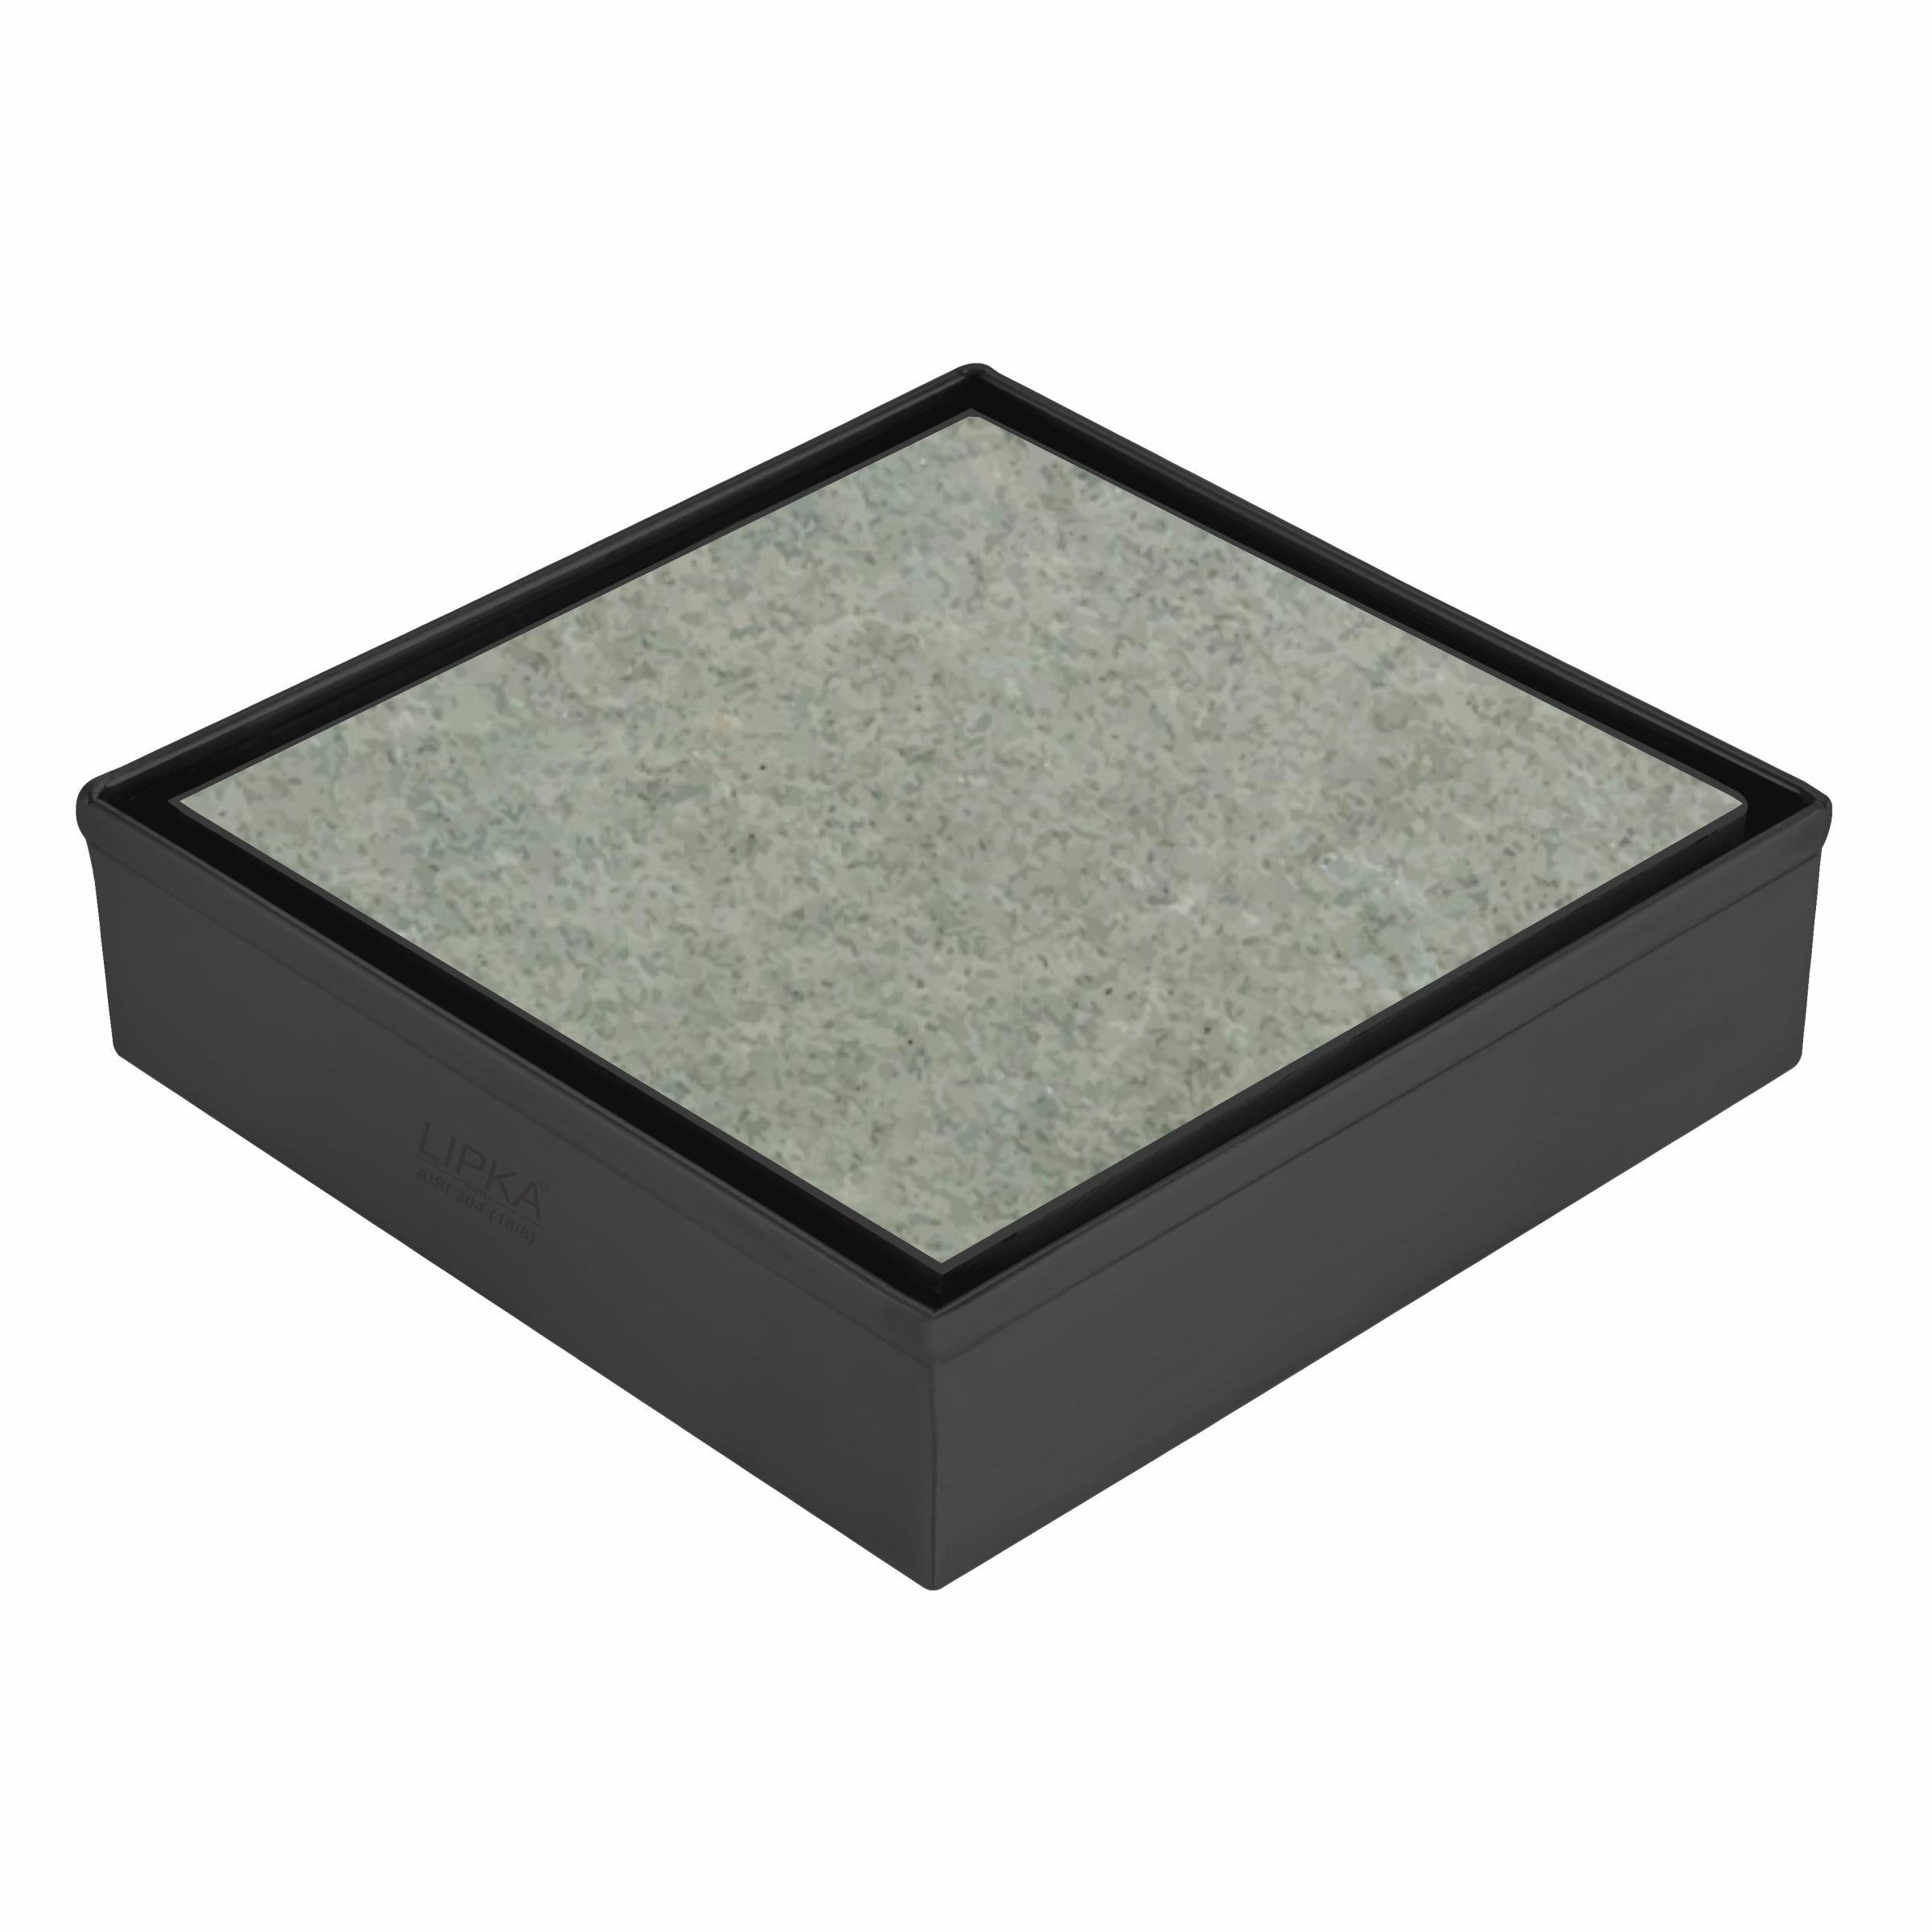 Tile Insert Square Floor Drain - Black (5 x 5 Inches)  